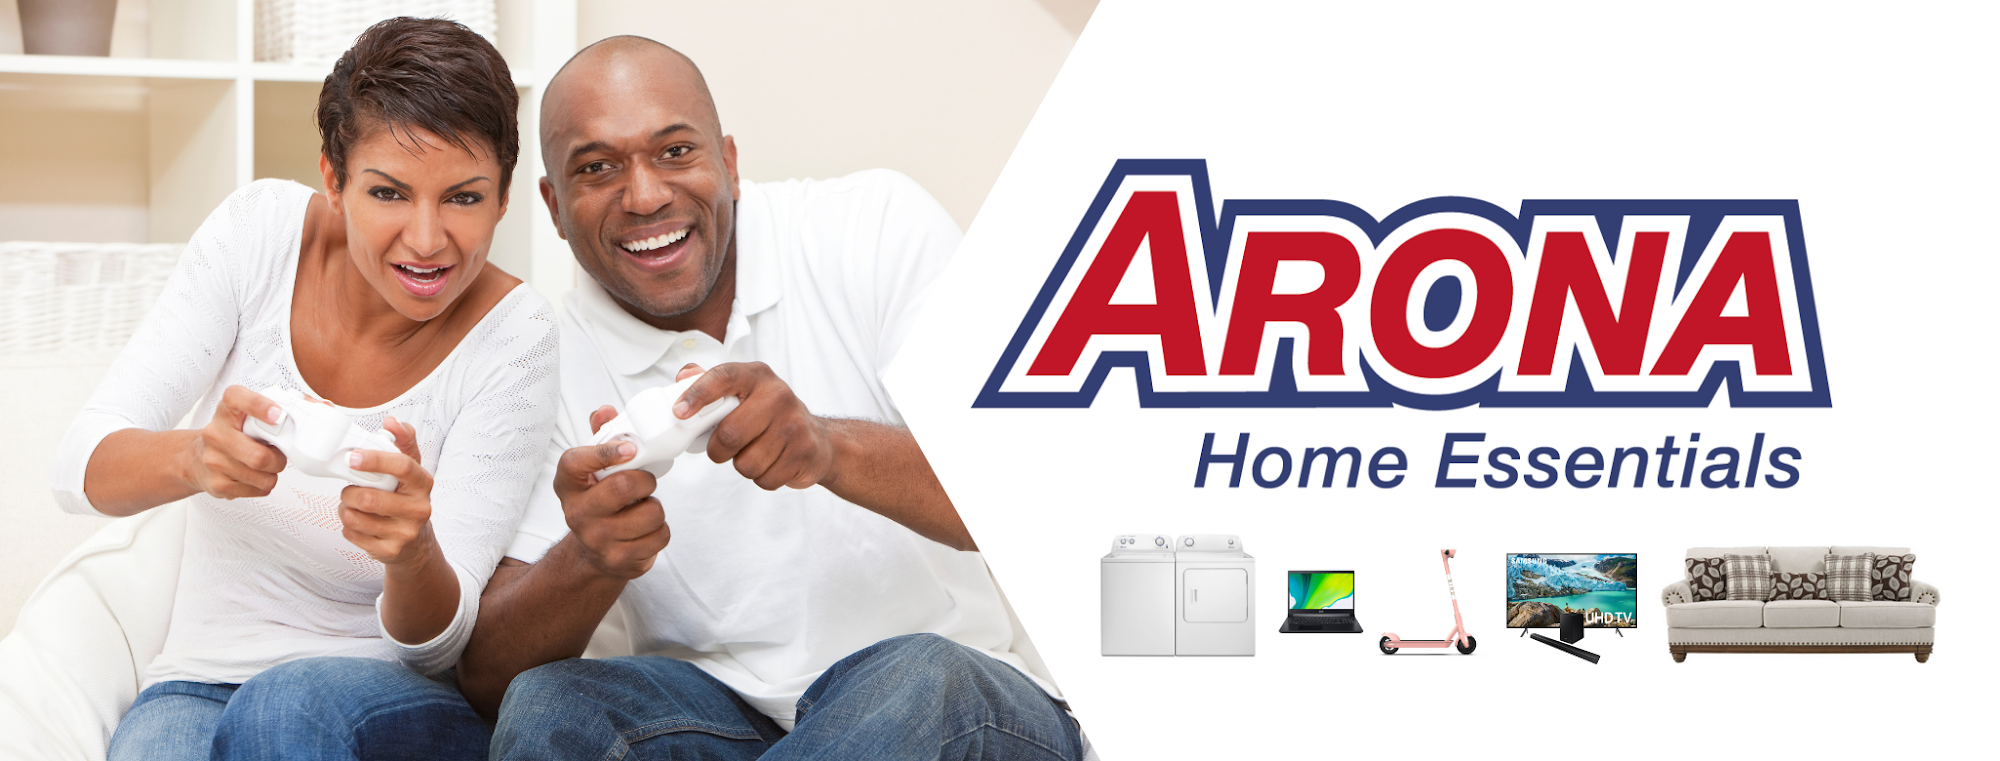 Arona Home Essentials Des Moines